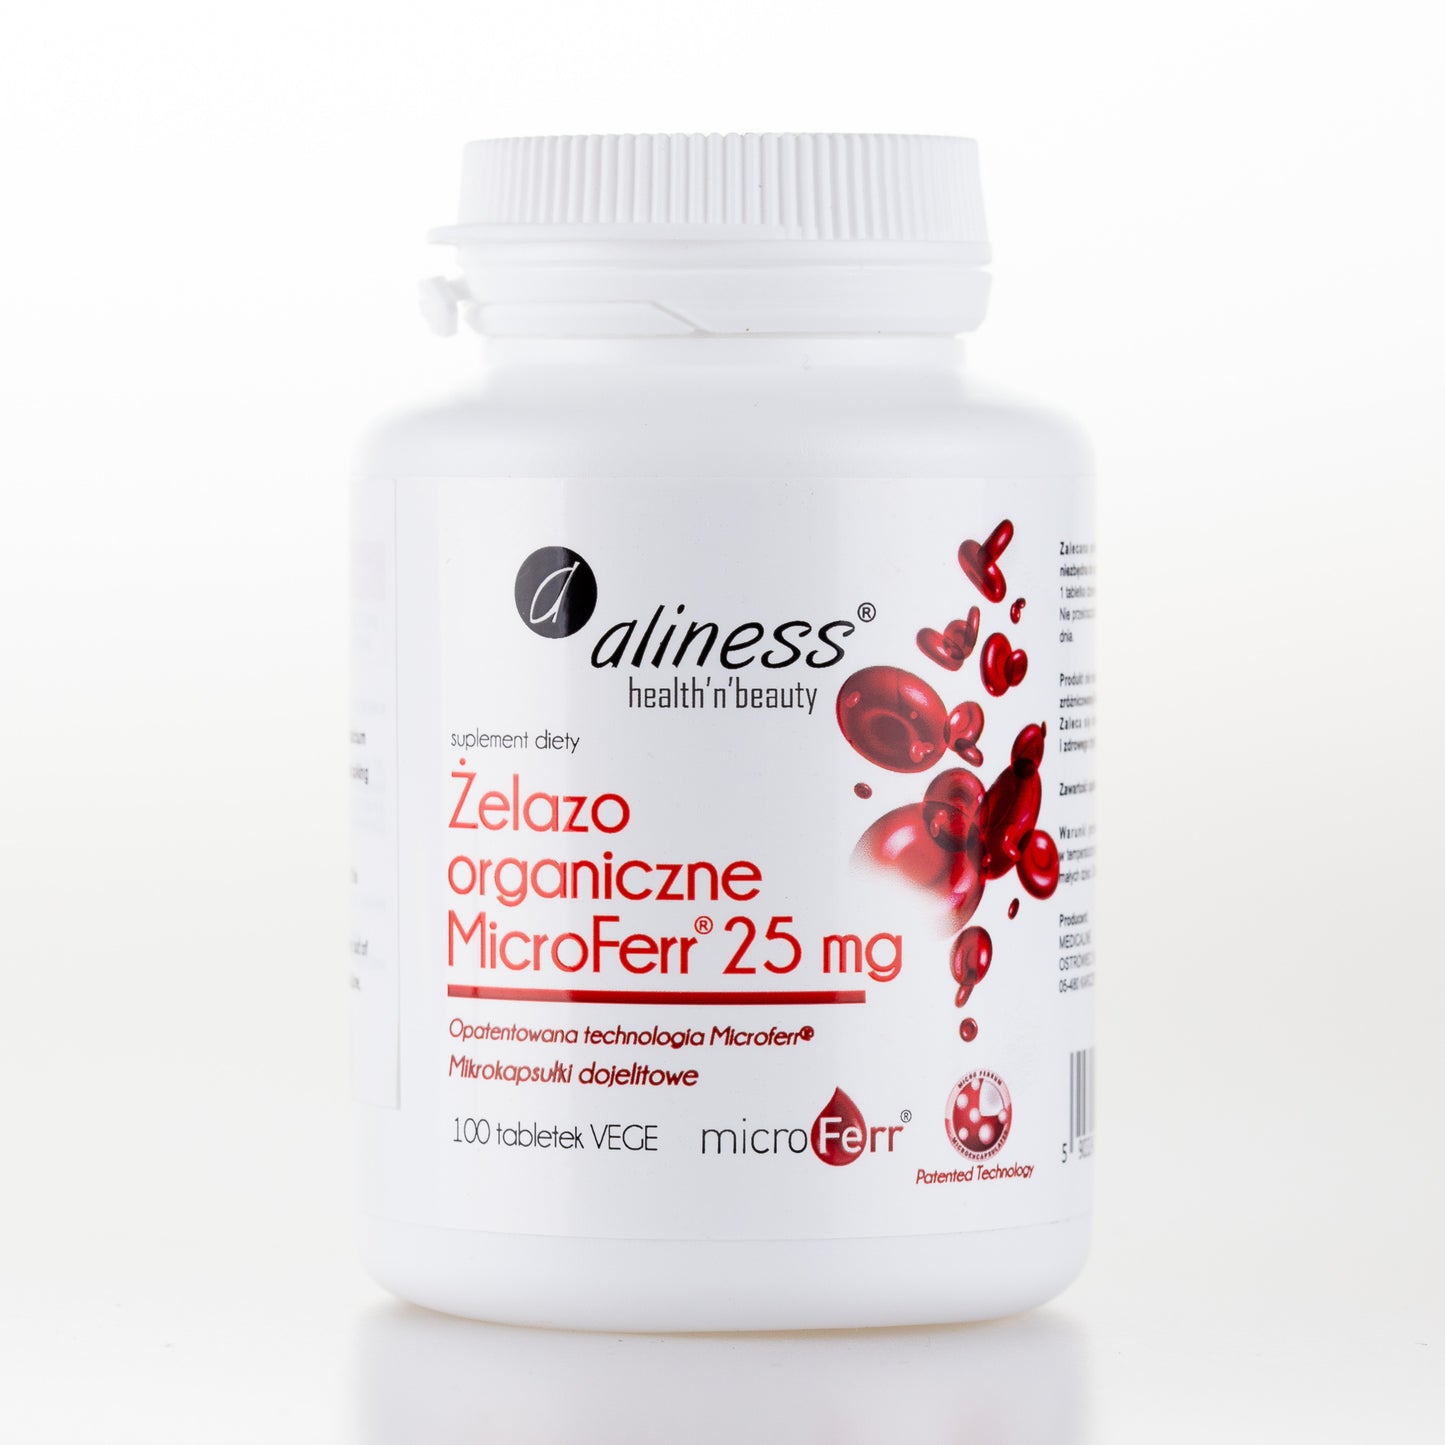 Iron MicroFerr 25mg organic supplement, 100 vegan pills